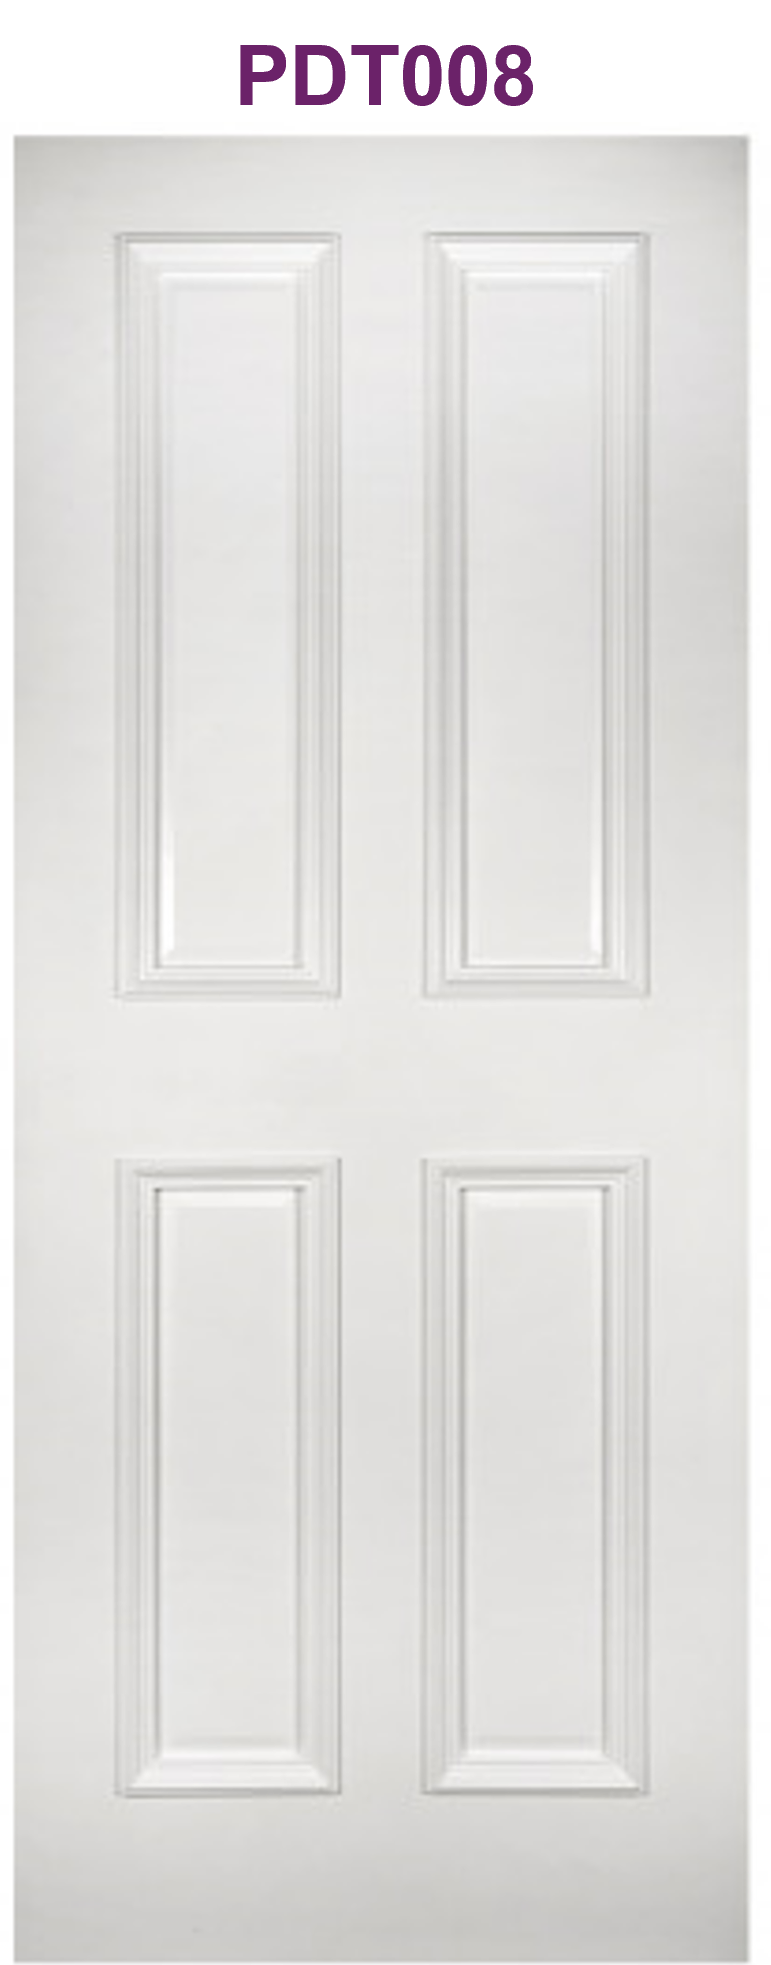 Rochester white primed interior door